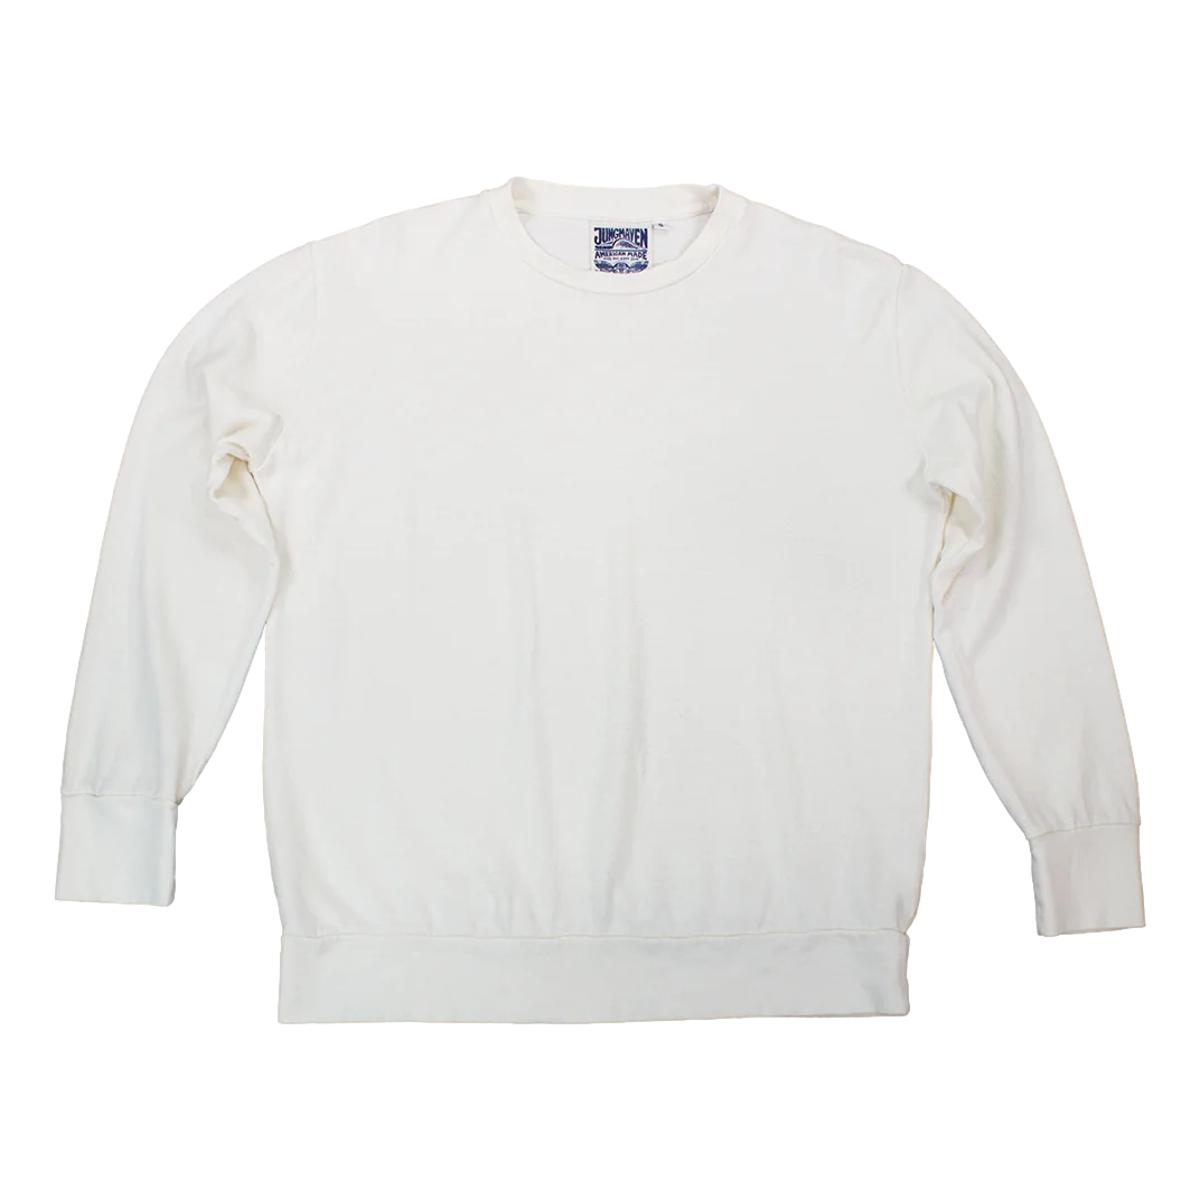 California Pullover Washed White - Sweatshirt